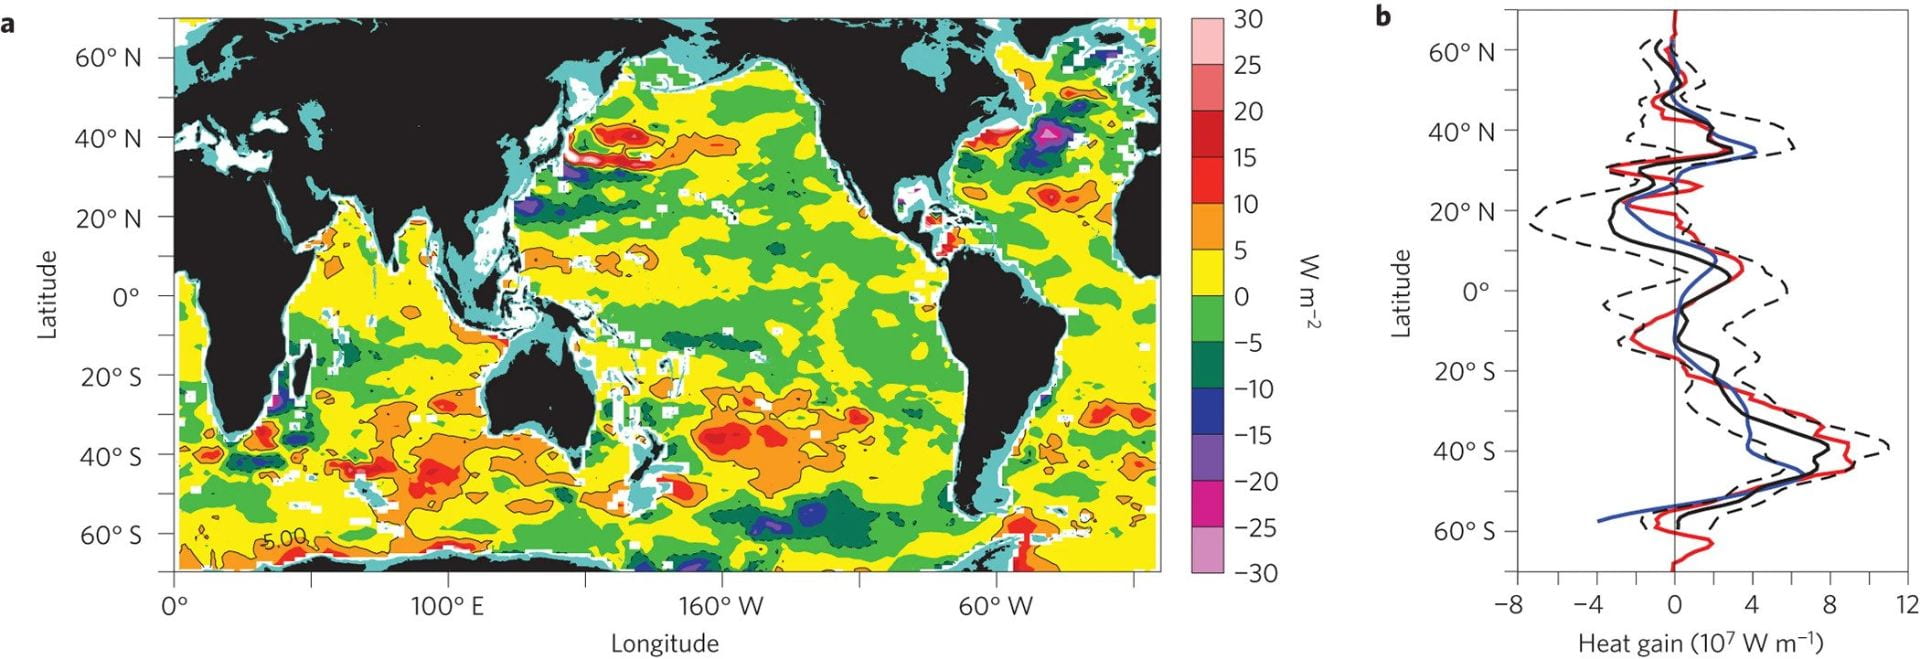 Map of world showing ocean heat content across the oceans